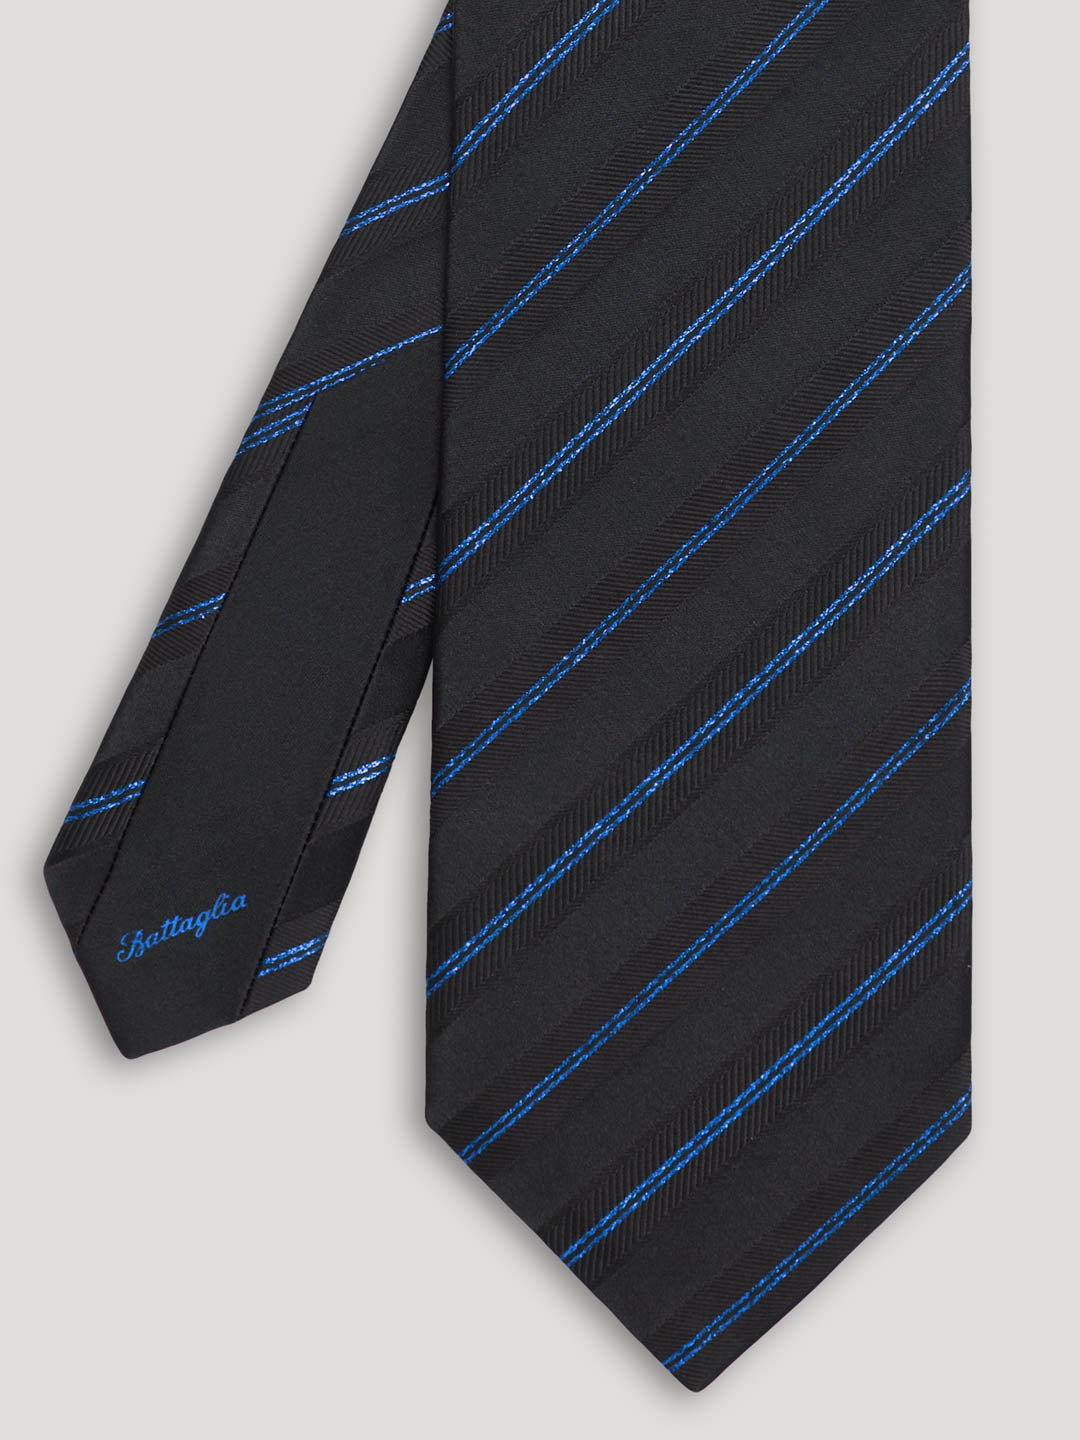 Black silk tie with blue stripes. 